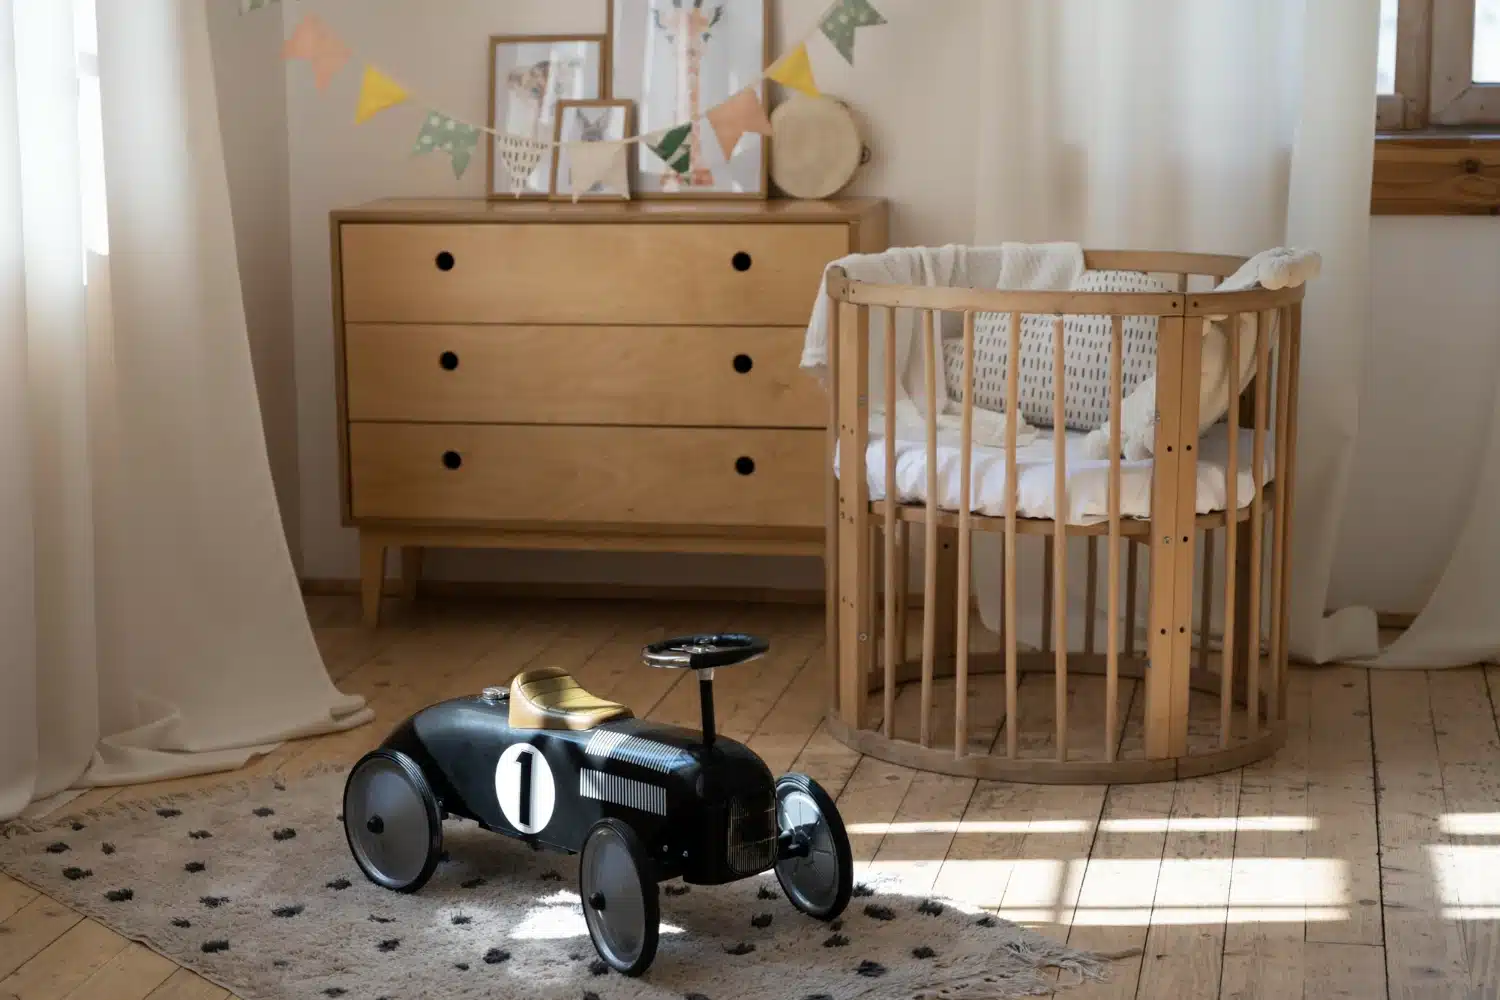 Design The Perfect Nursery With Bomi Kindermöbel’s Eco-Friendly Furniture